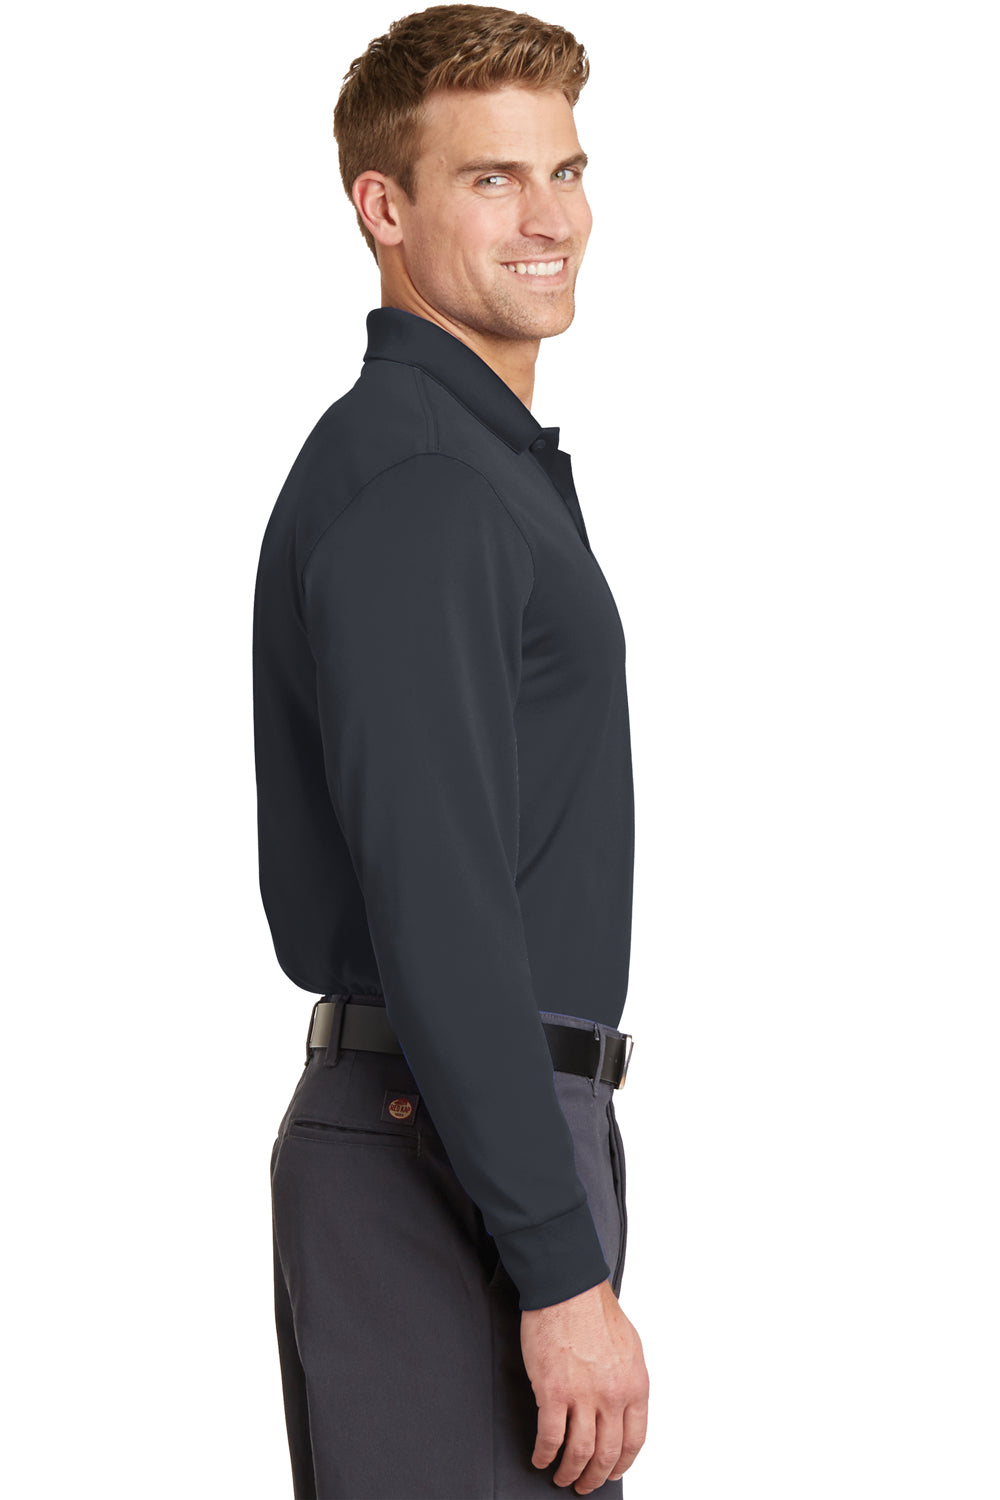 CornerStone CS412LS Mens Select Moisture Wicking Long Sleeve Polo Shirt Charcoal Grey Side